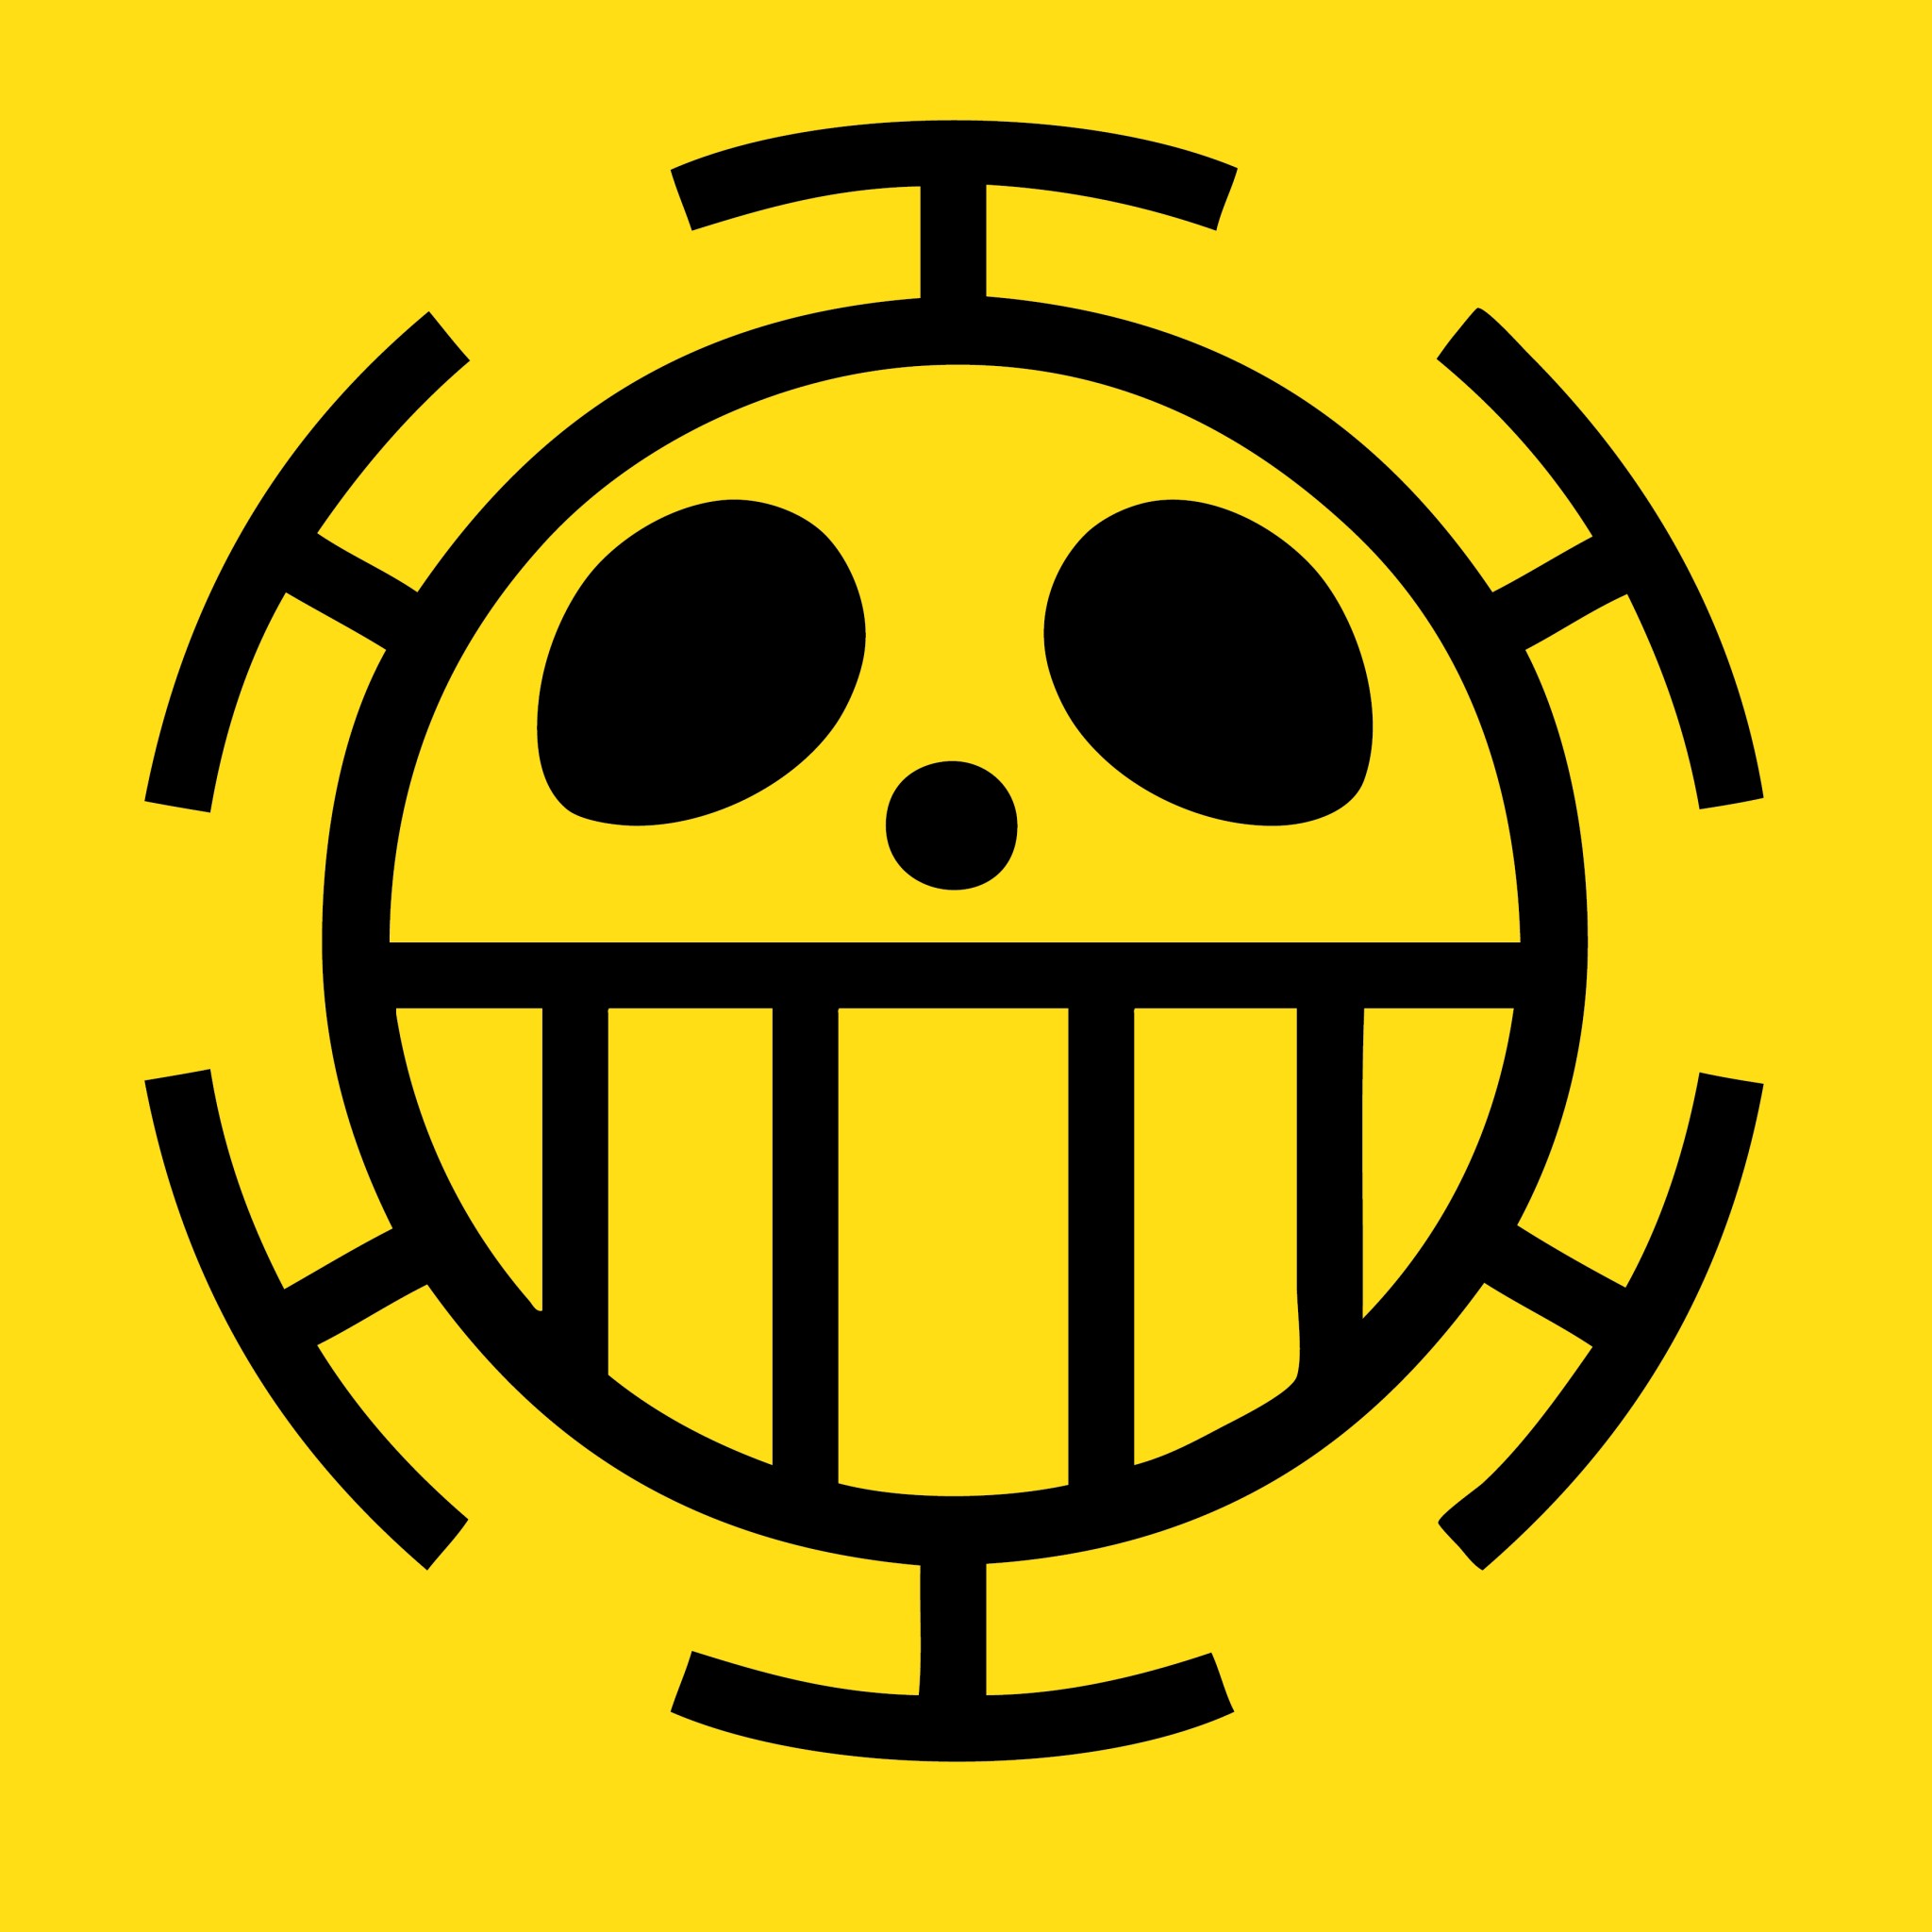 Download Trafalgar Law Yellow Logo 2048 x 2048 Wallpaper